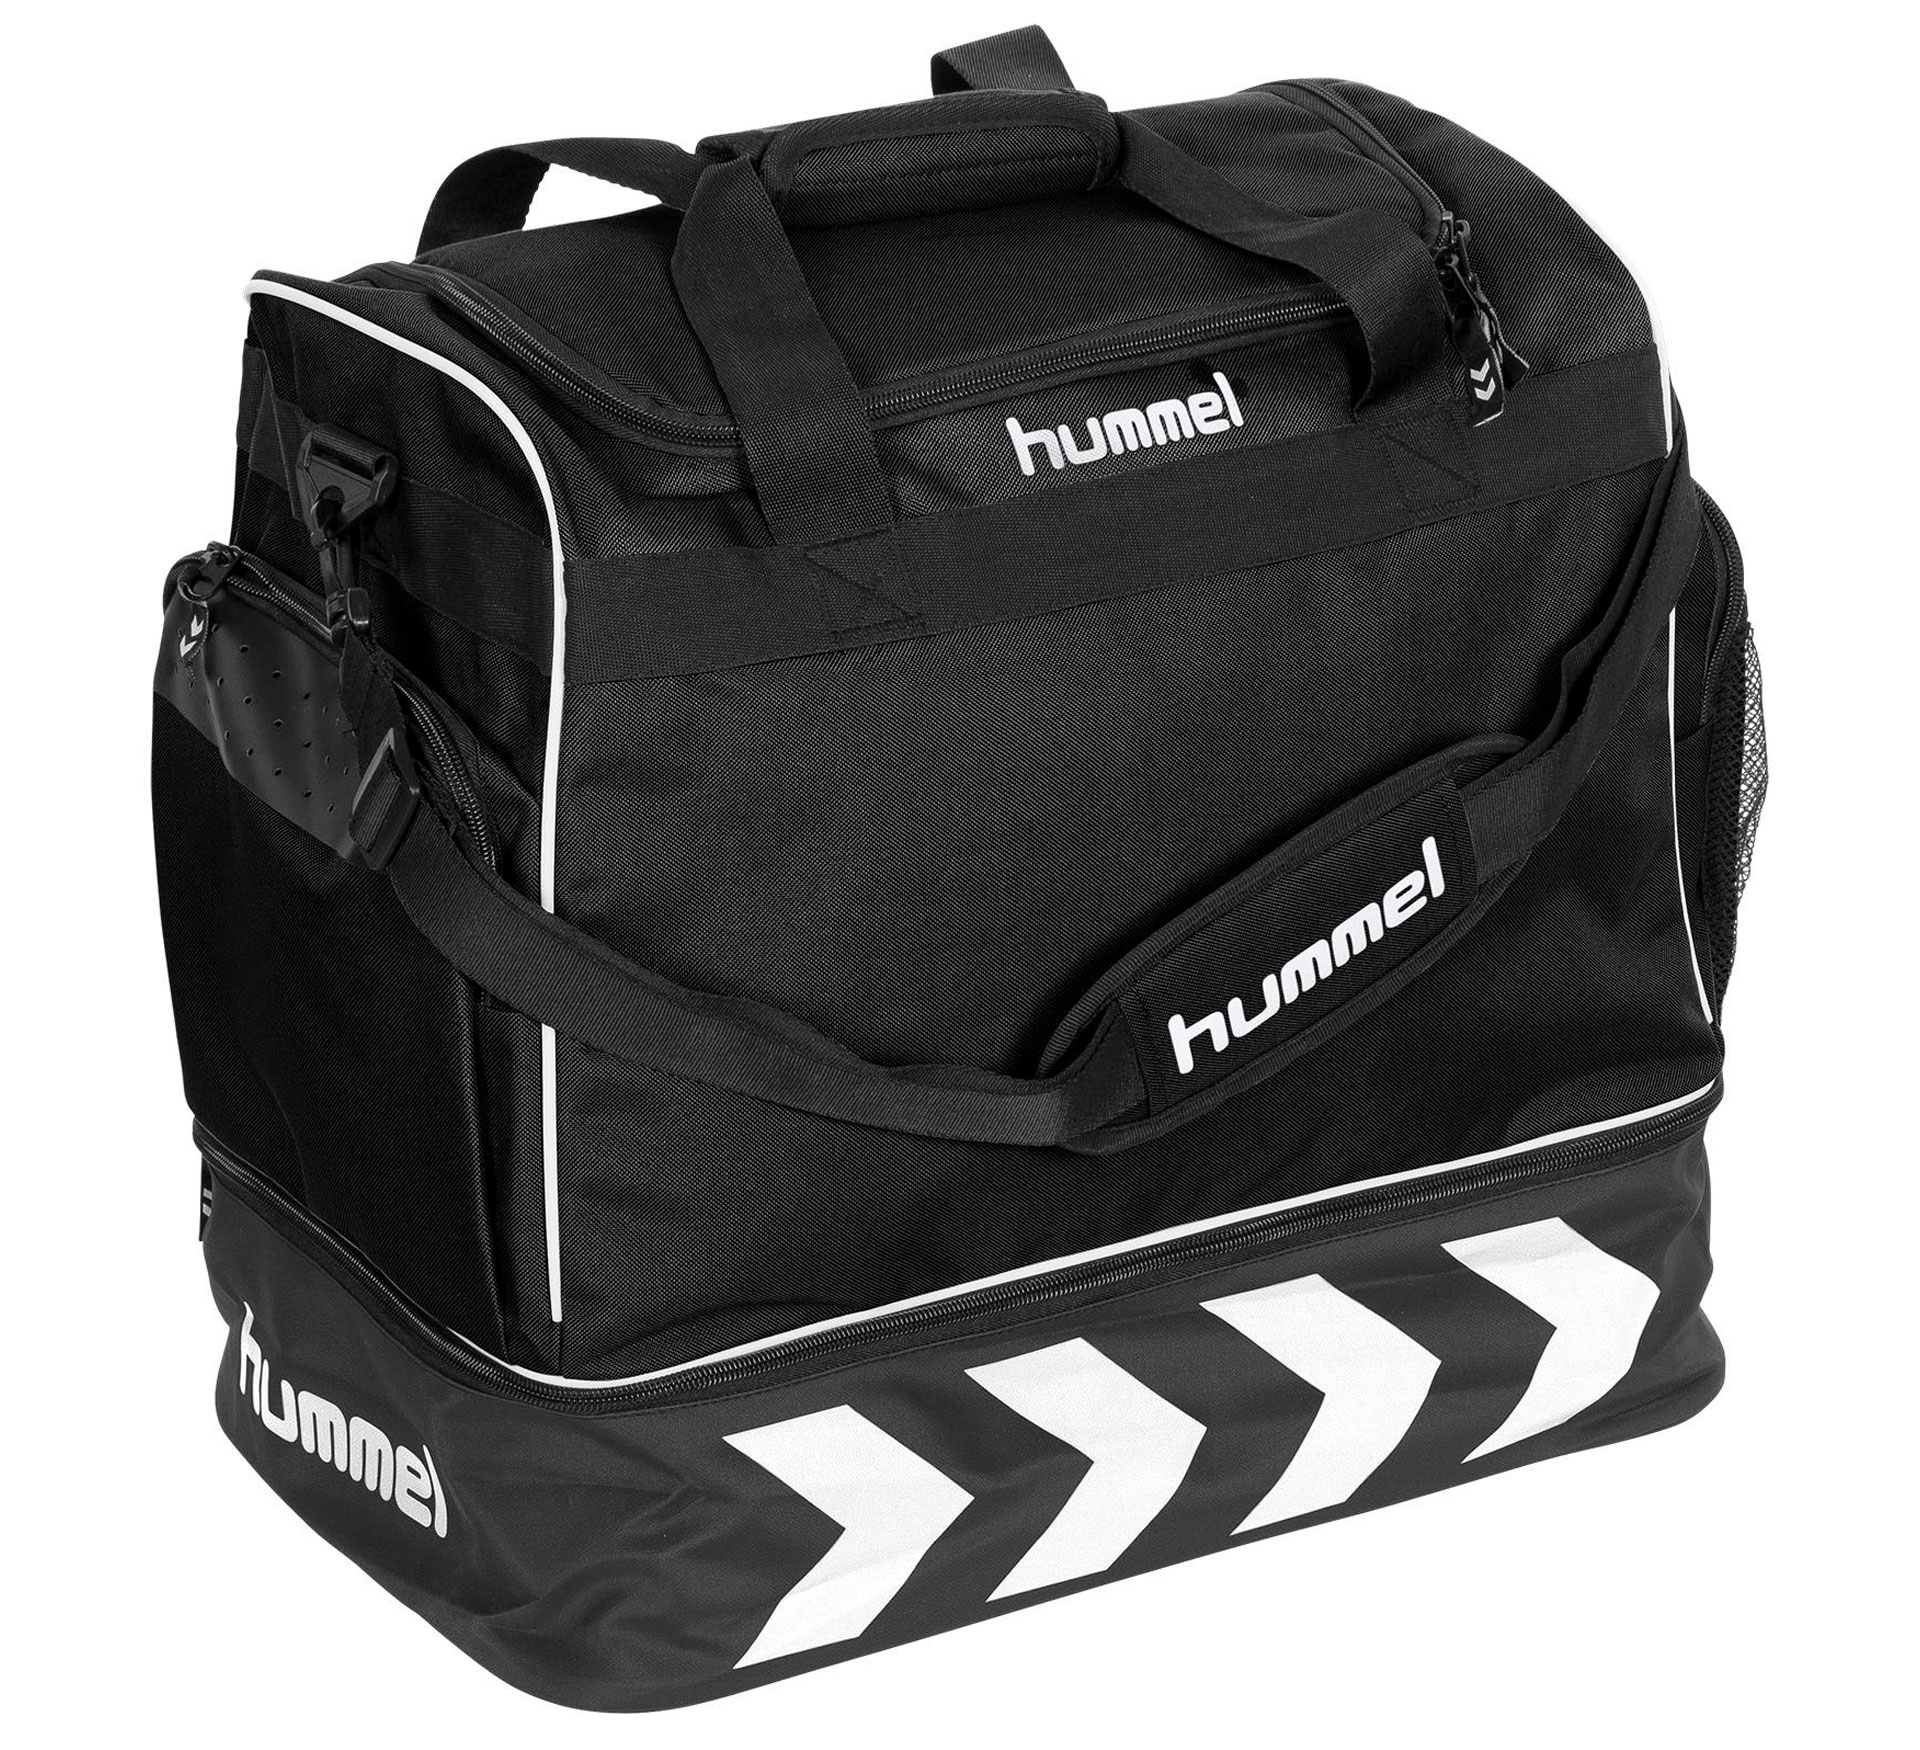 Le sac de sport Hummel Supreme Pro Bag